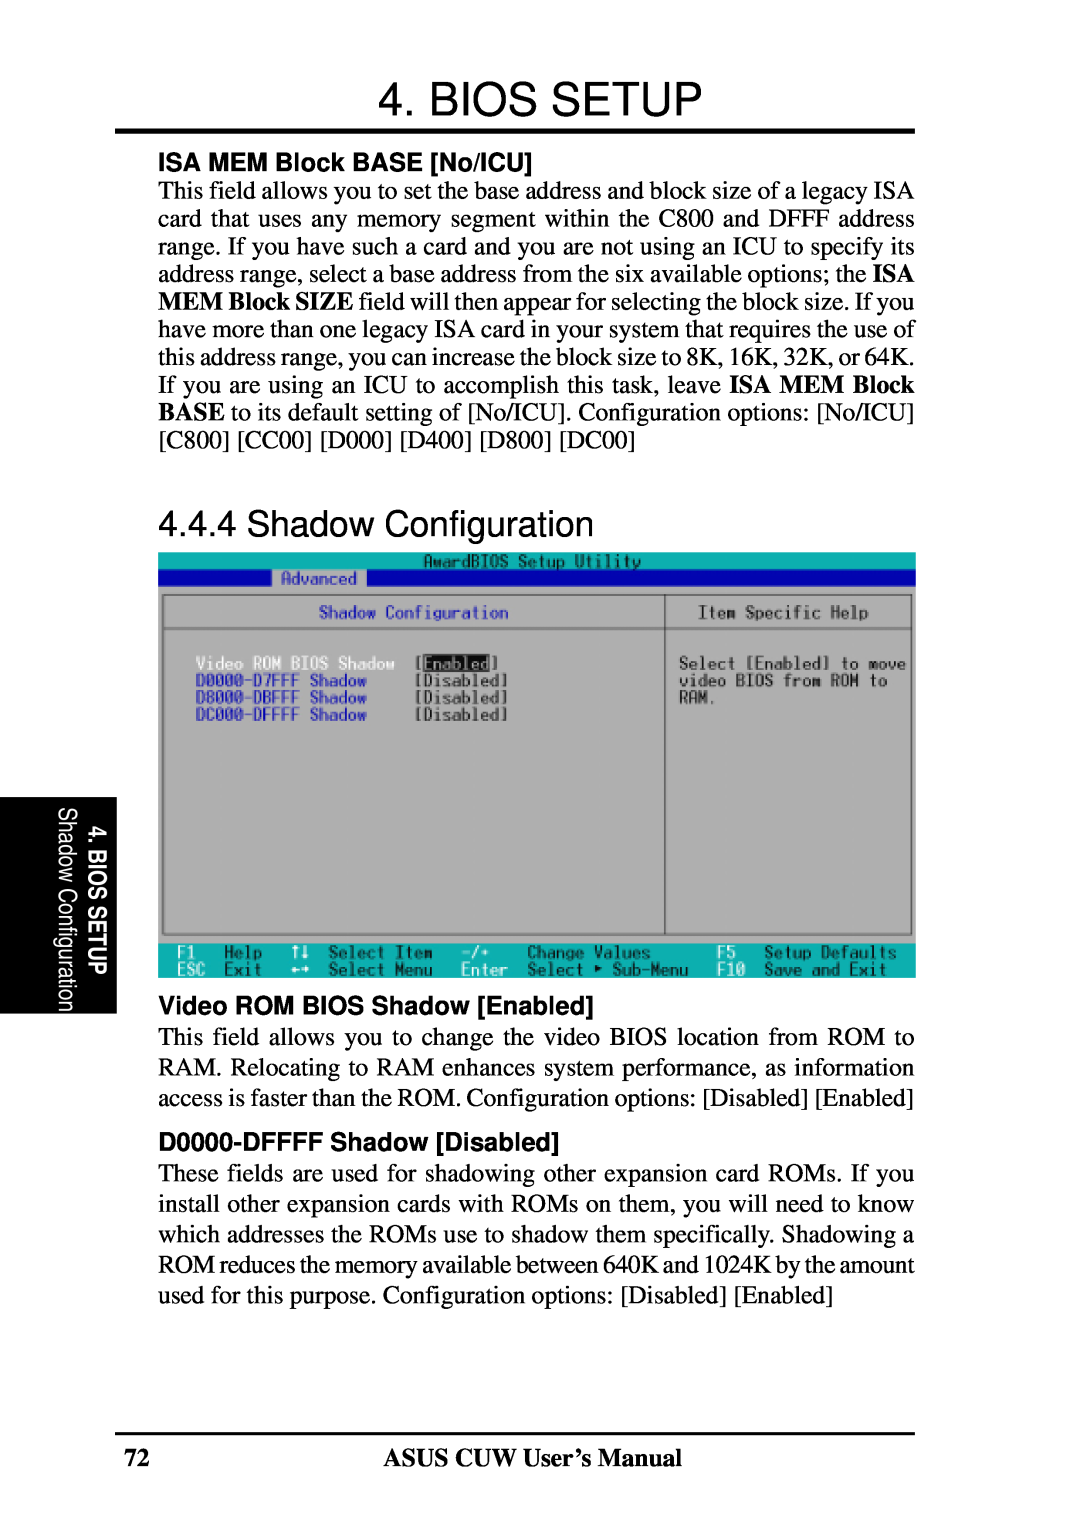 Asus 810 Shadow Configuration, ISA MEM Block BASE No/ICU, Video ROM BIOS Shadow Enabled, D0000-DFFFF Shadow Disabled 